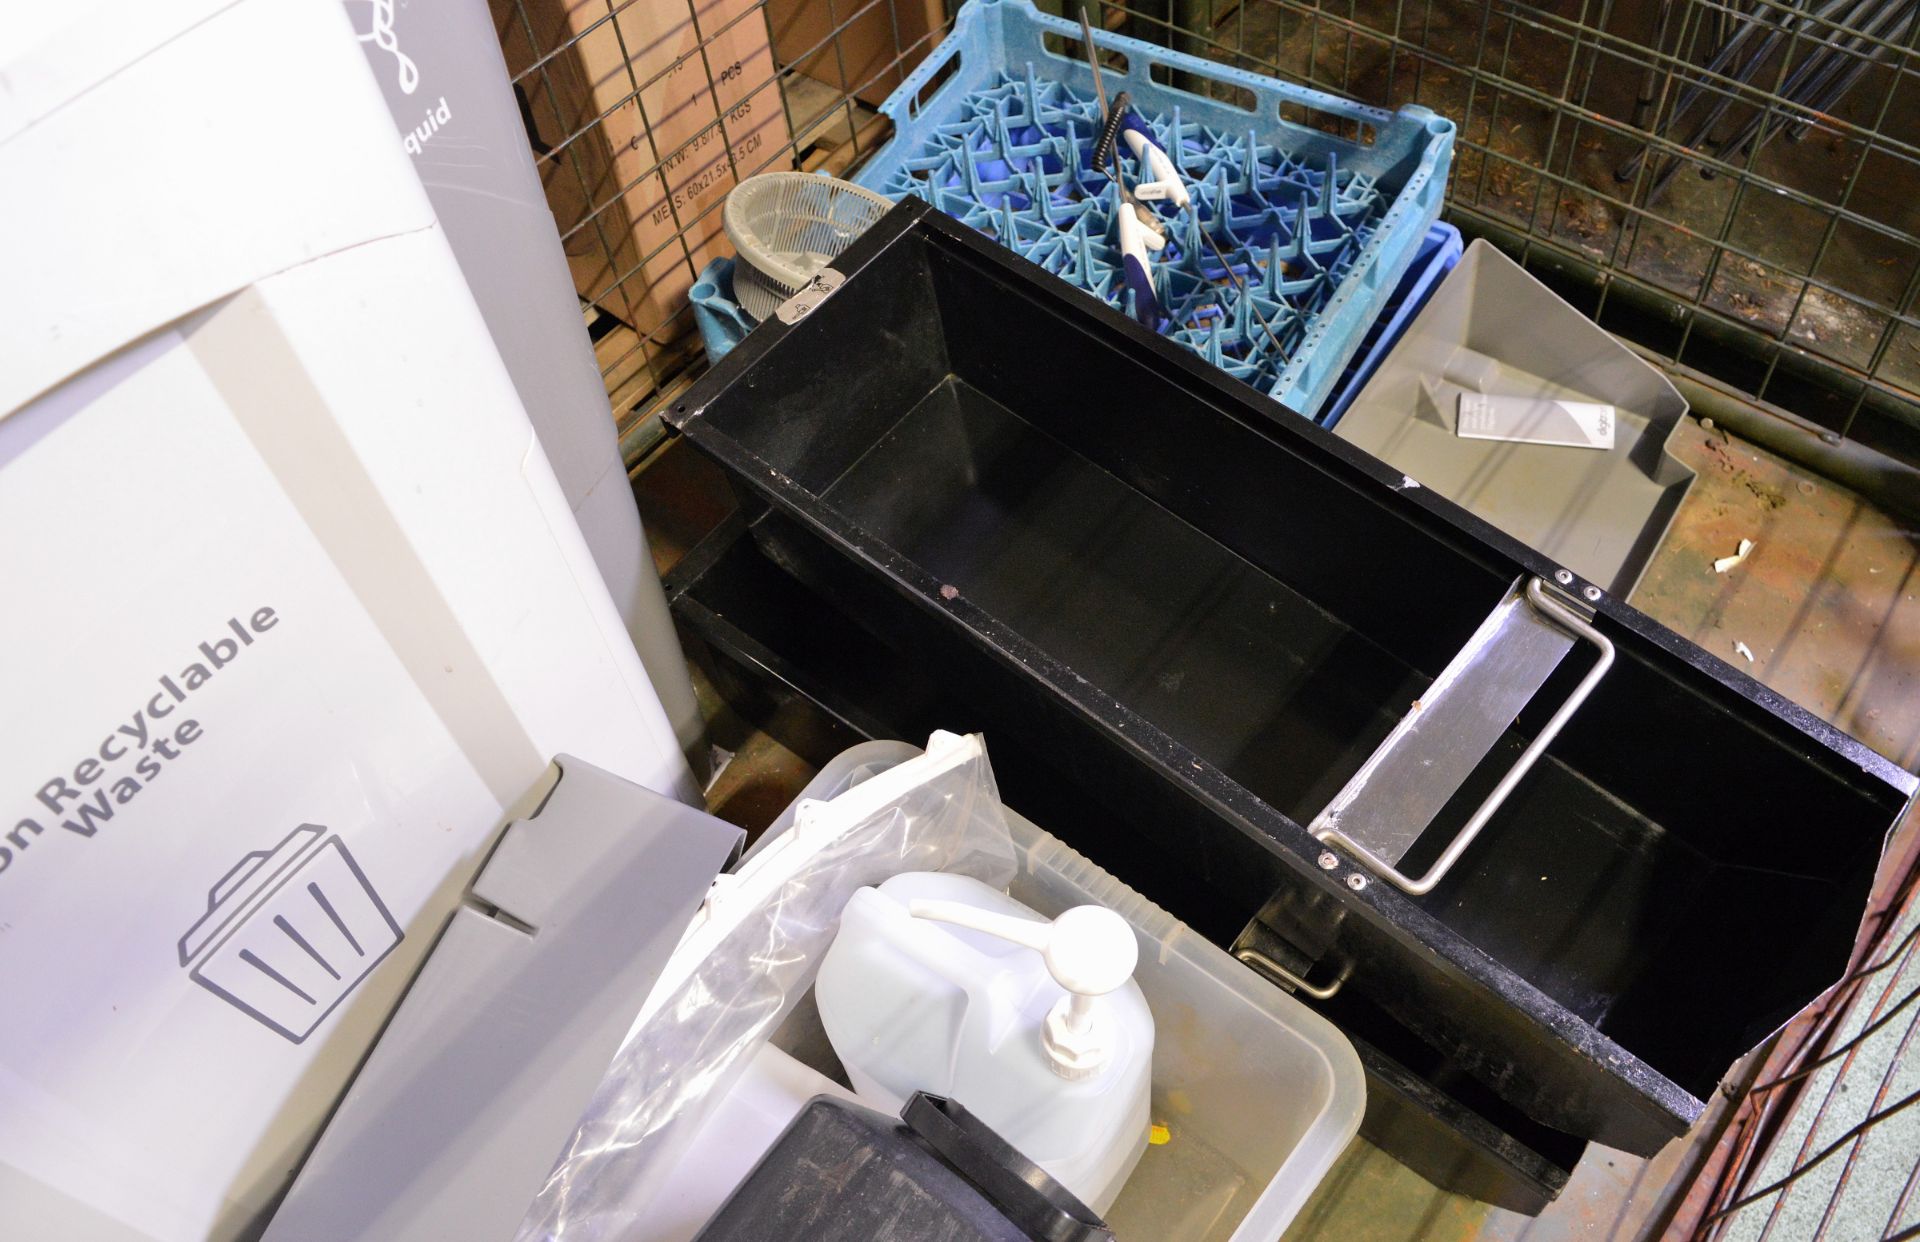 Recycling / waste bins, dishwasher trays - Image 4 of 6